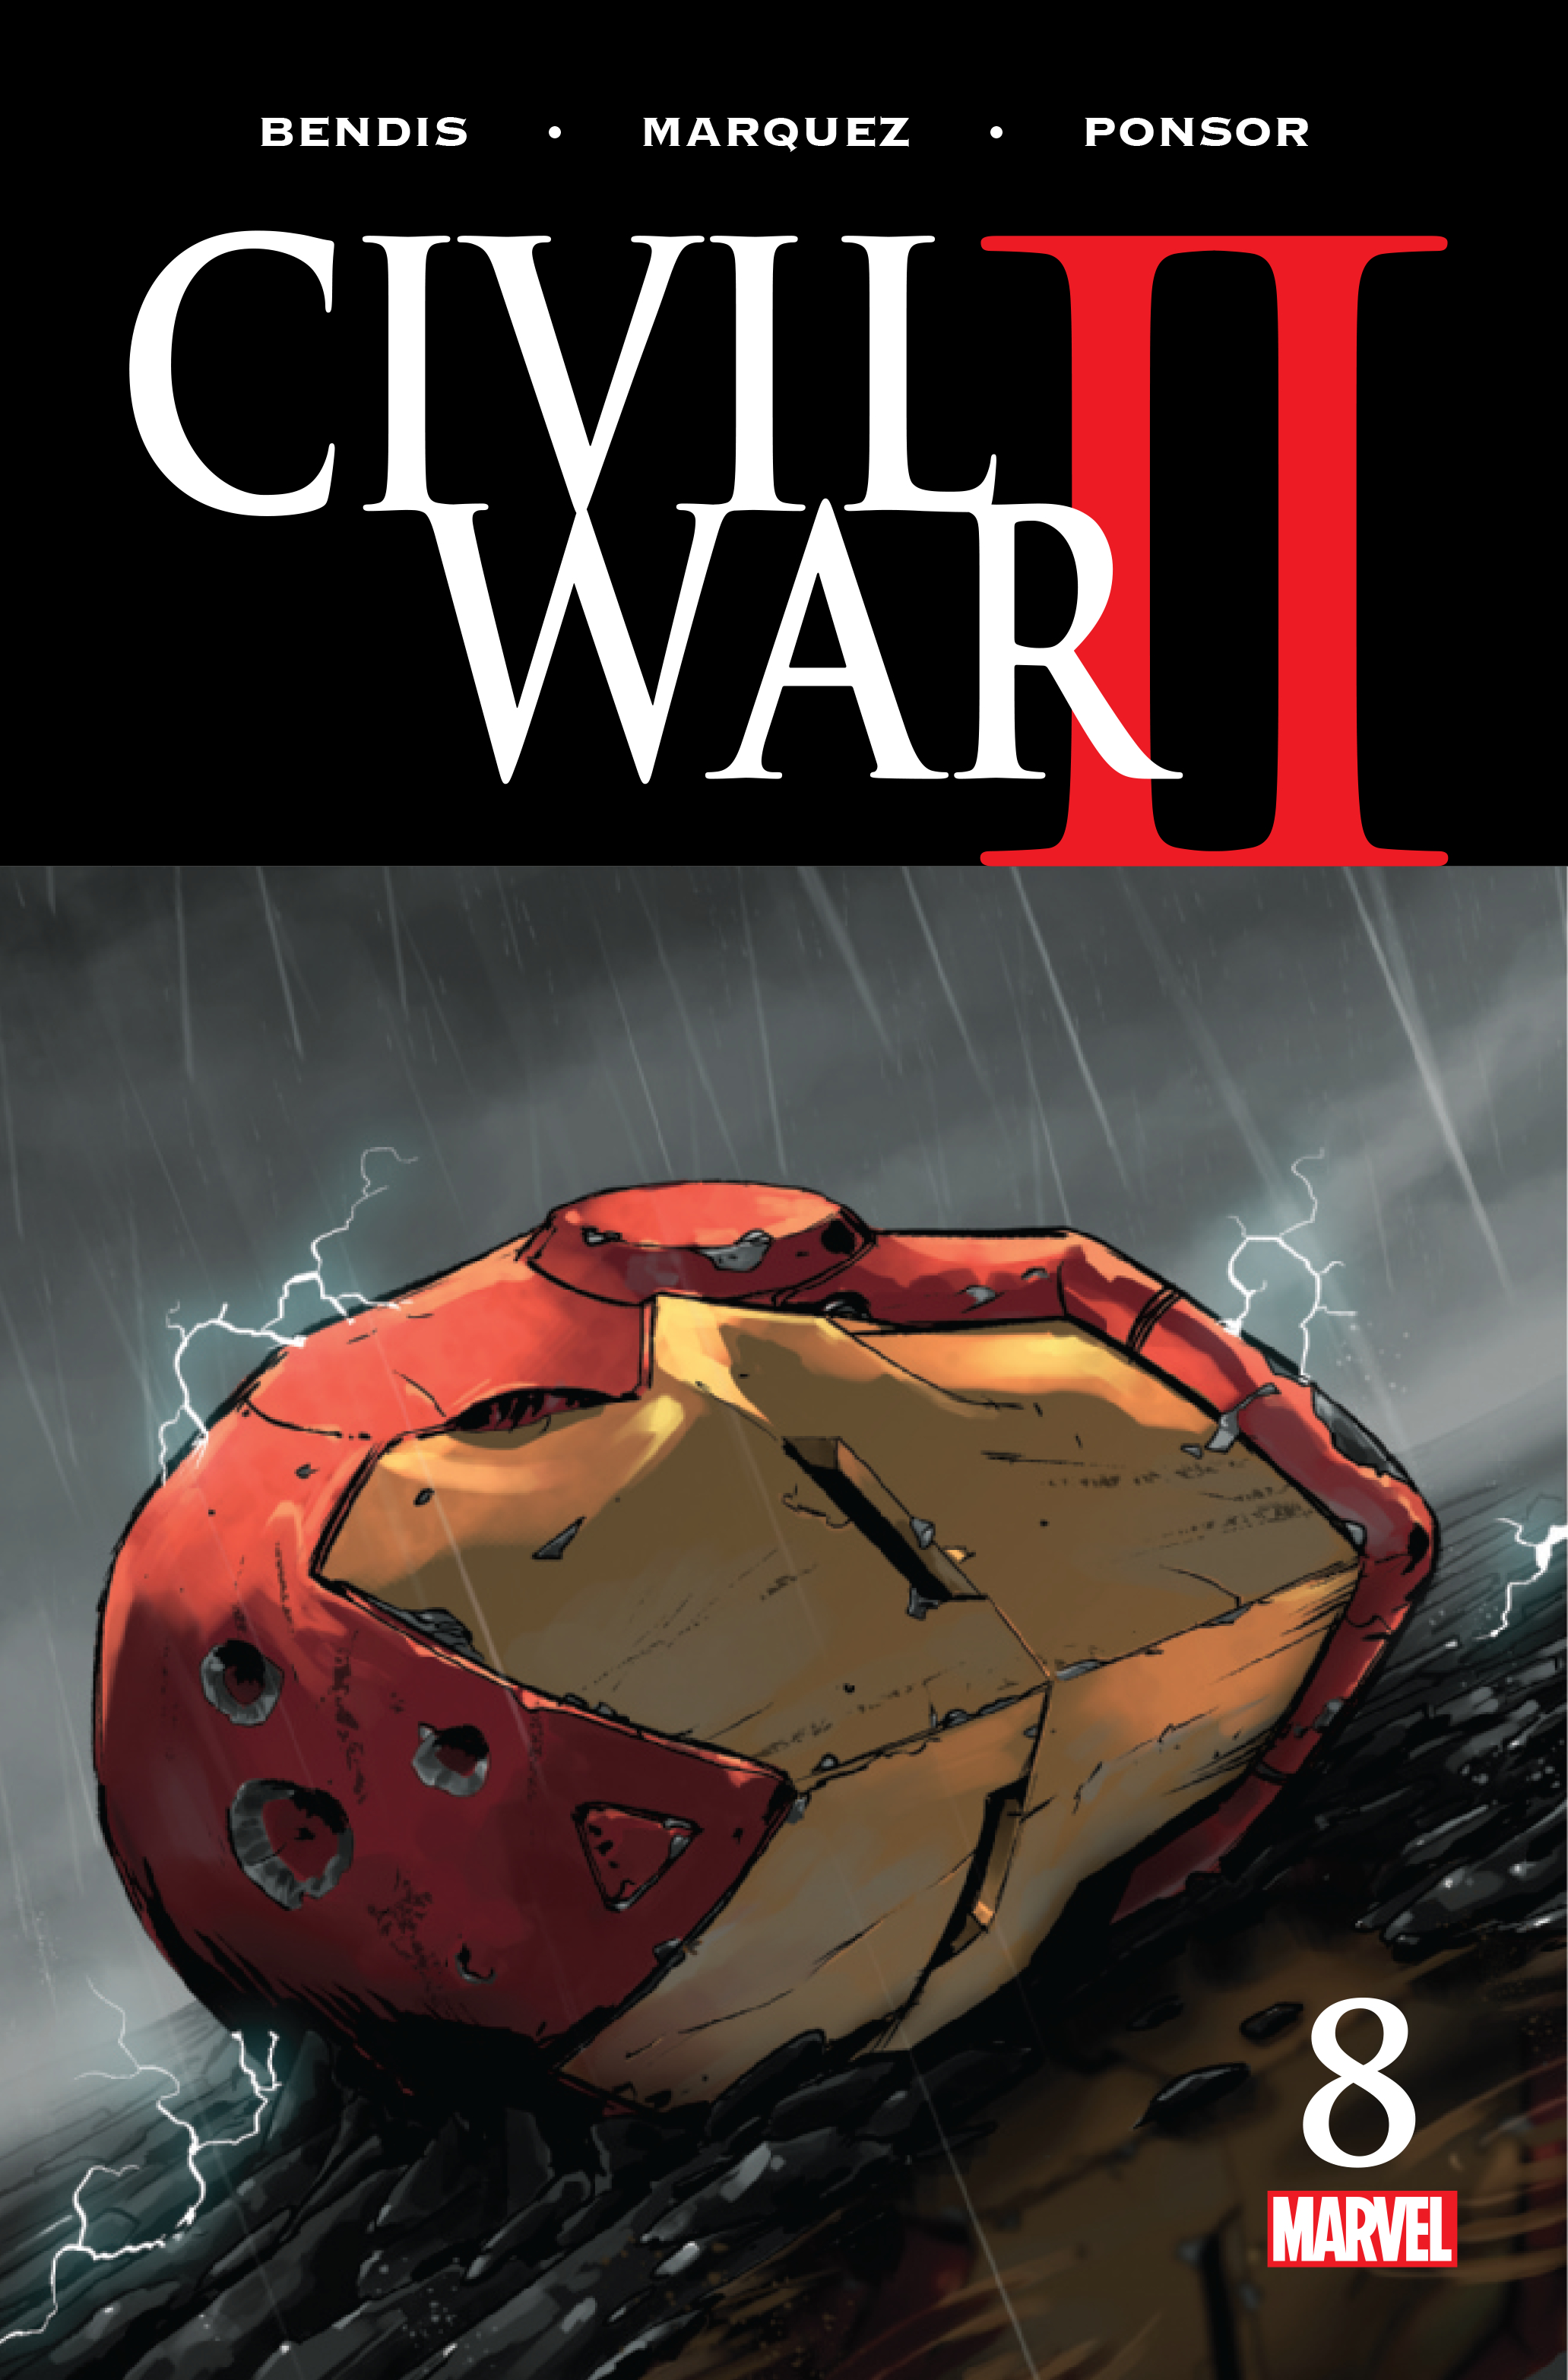 CIVIL WAR II #8 (OF 8)